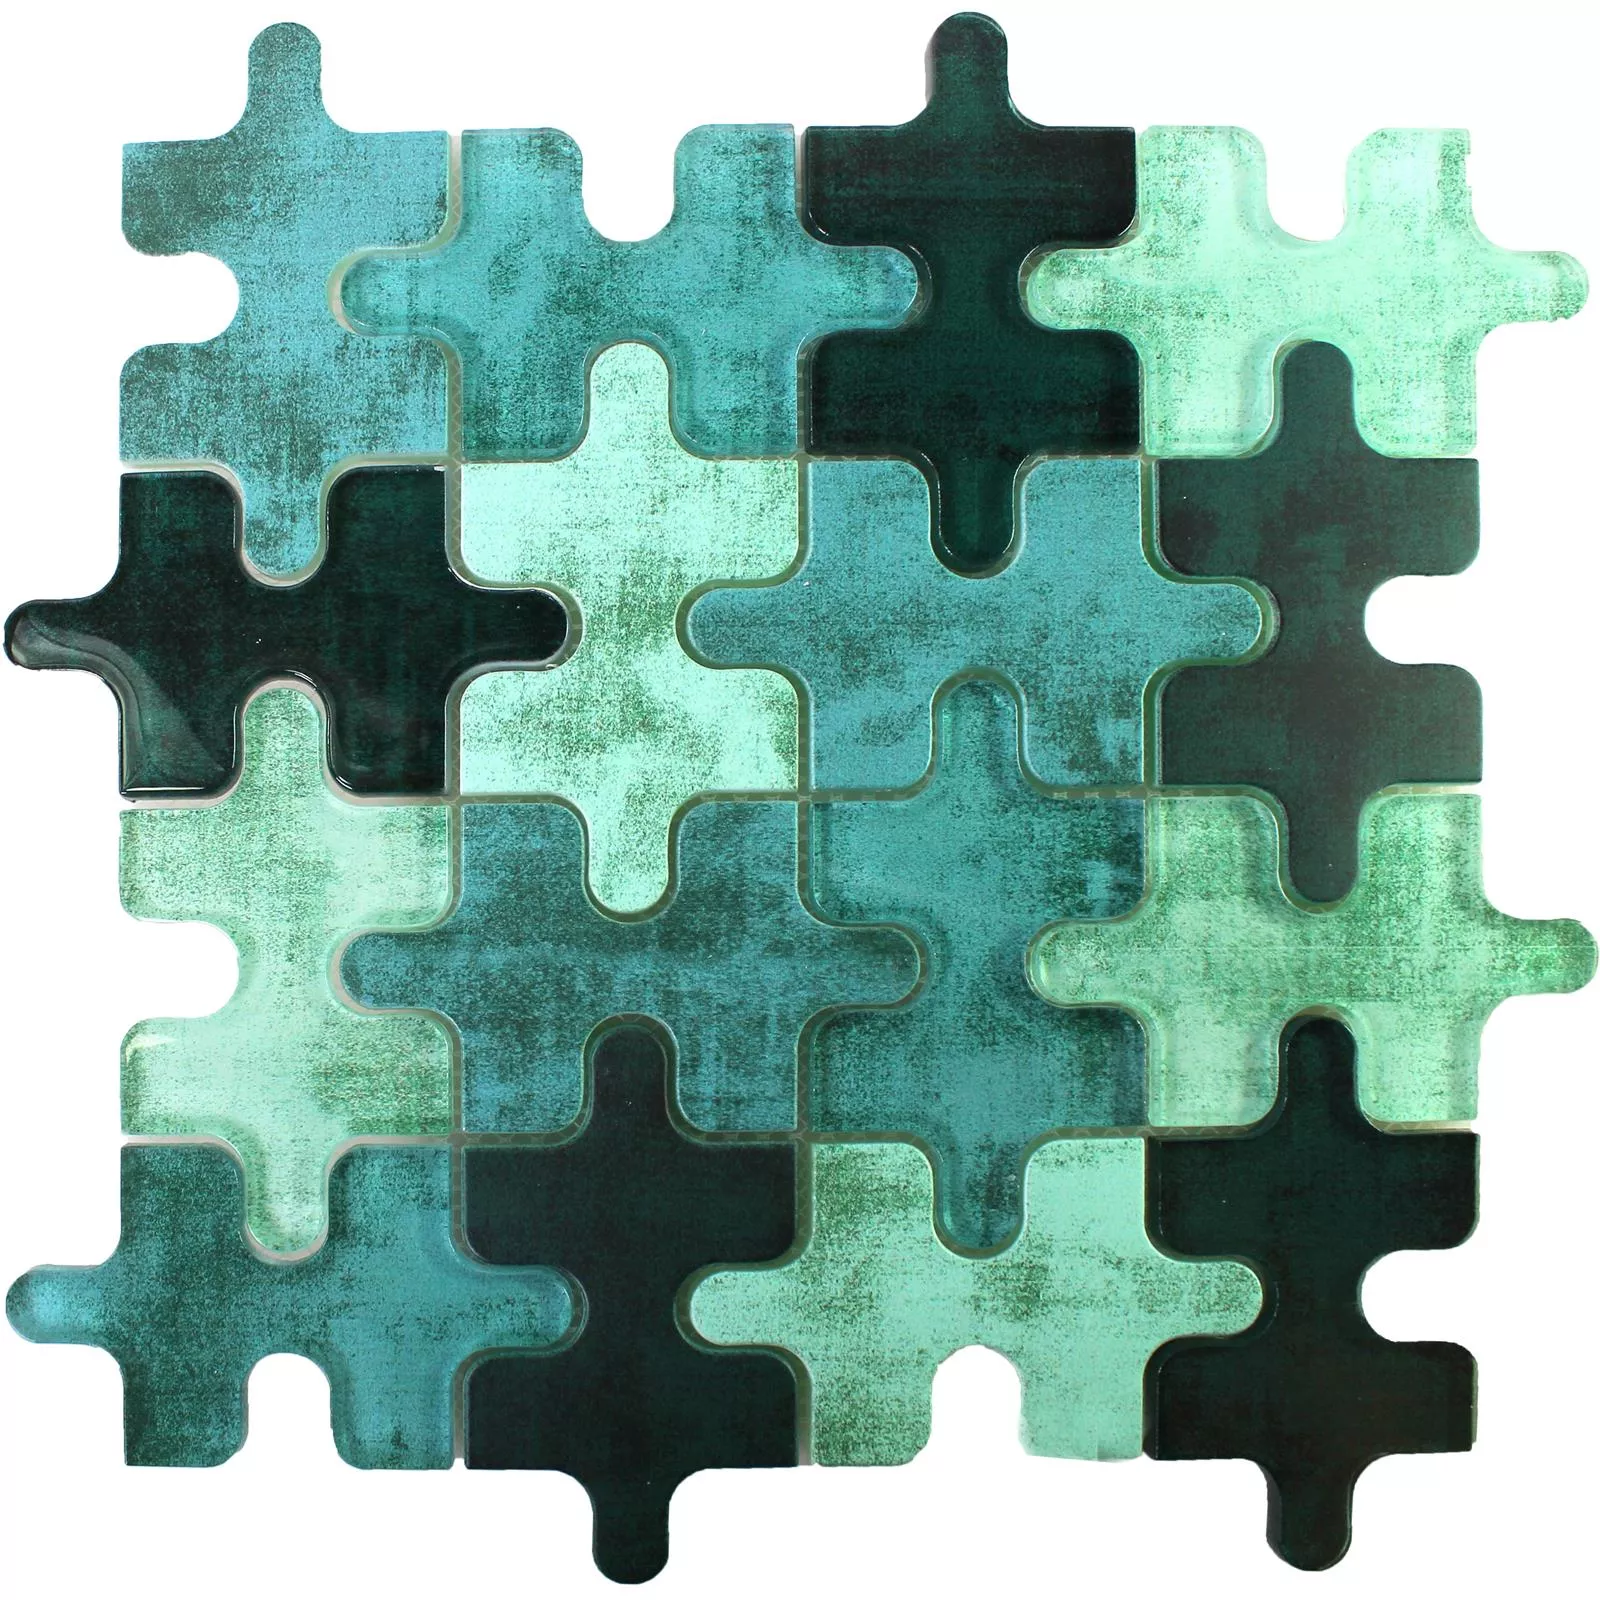 Mozaika Szklana Płytki Puzzle Zielony